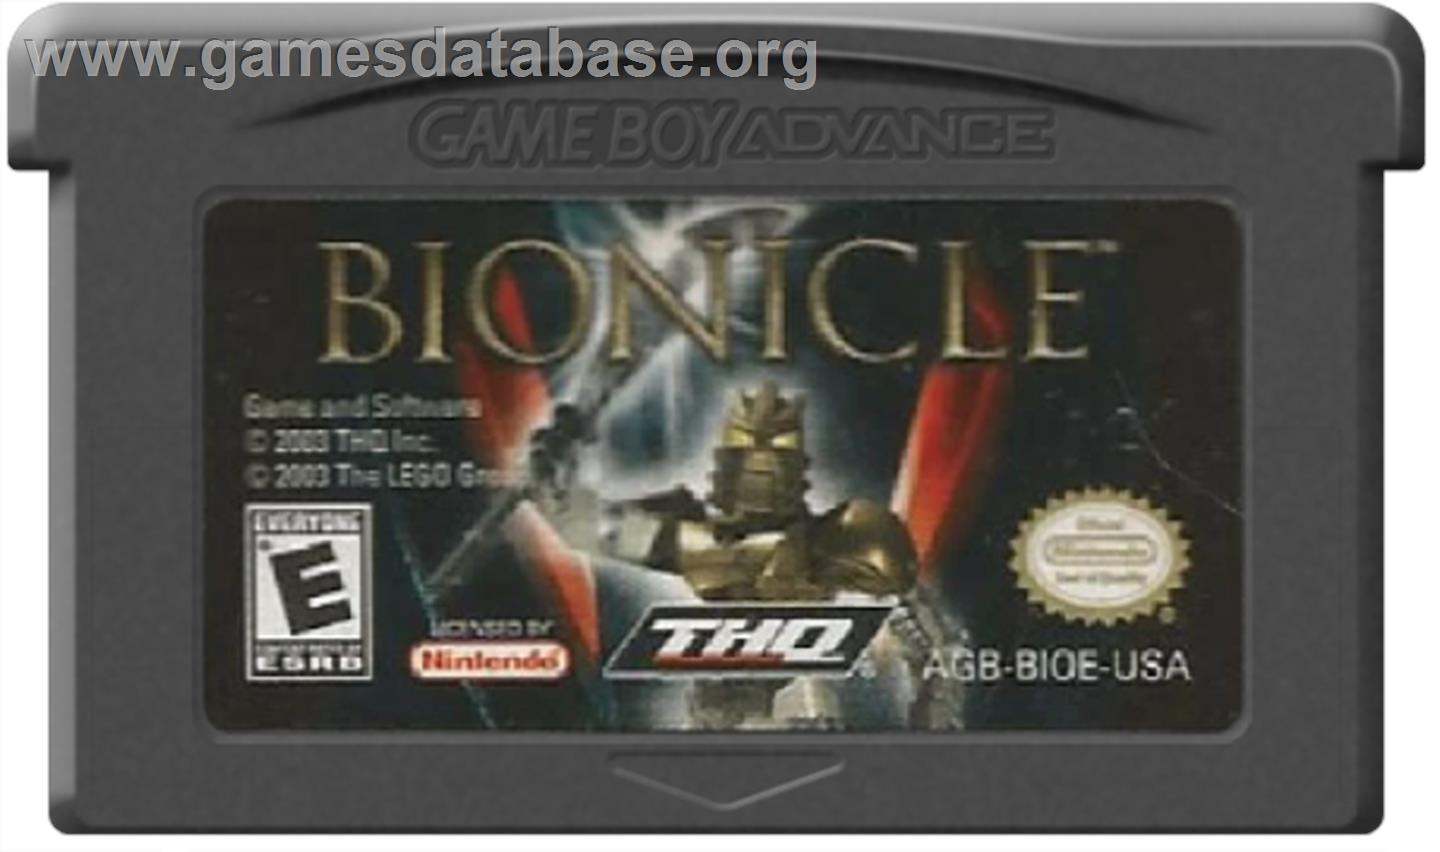 Bionicle: Maze of Shadows - Nintendo Game Boy Advance - Artwork - Cartridge